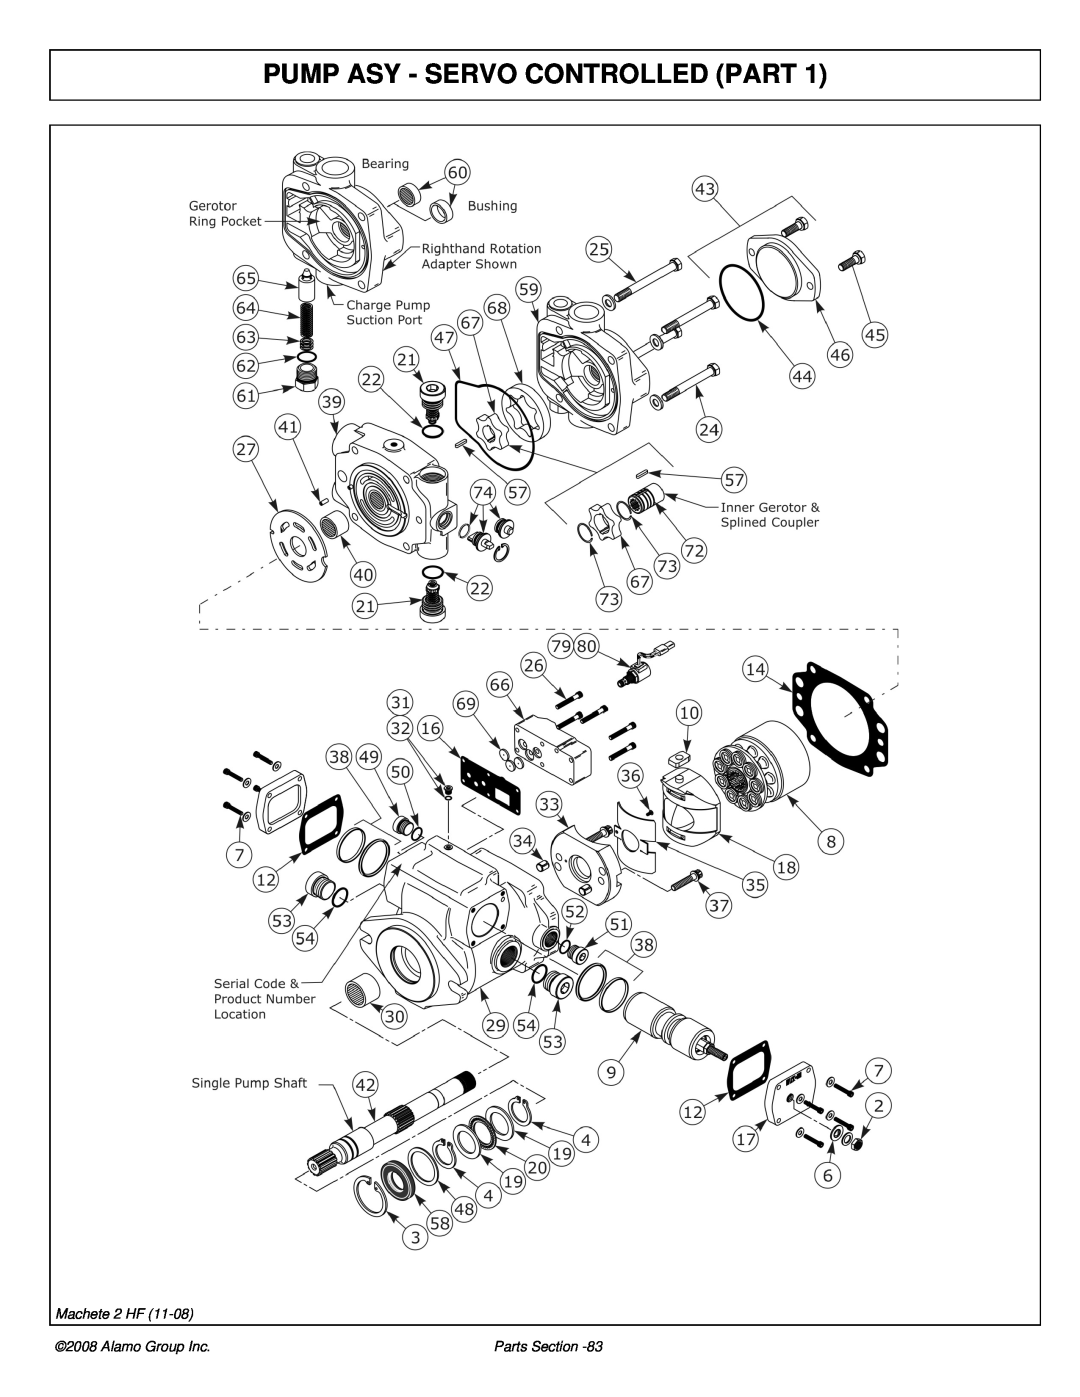 Alamo 02986941P manual Pump Asy - Servo Controlled Part, Machete 2 HF, Alamo Group Inc, Parts Section 